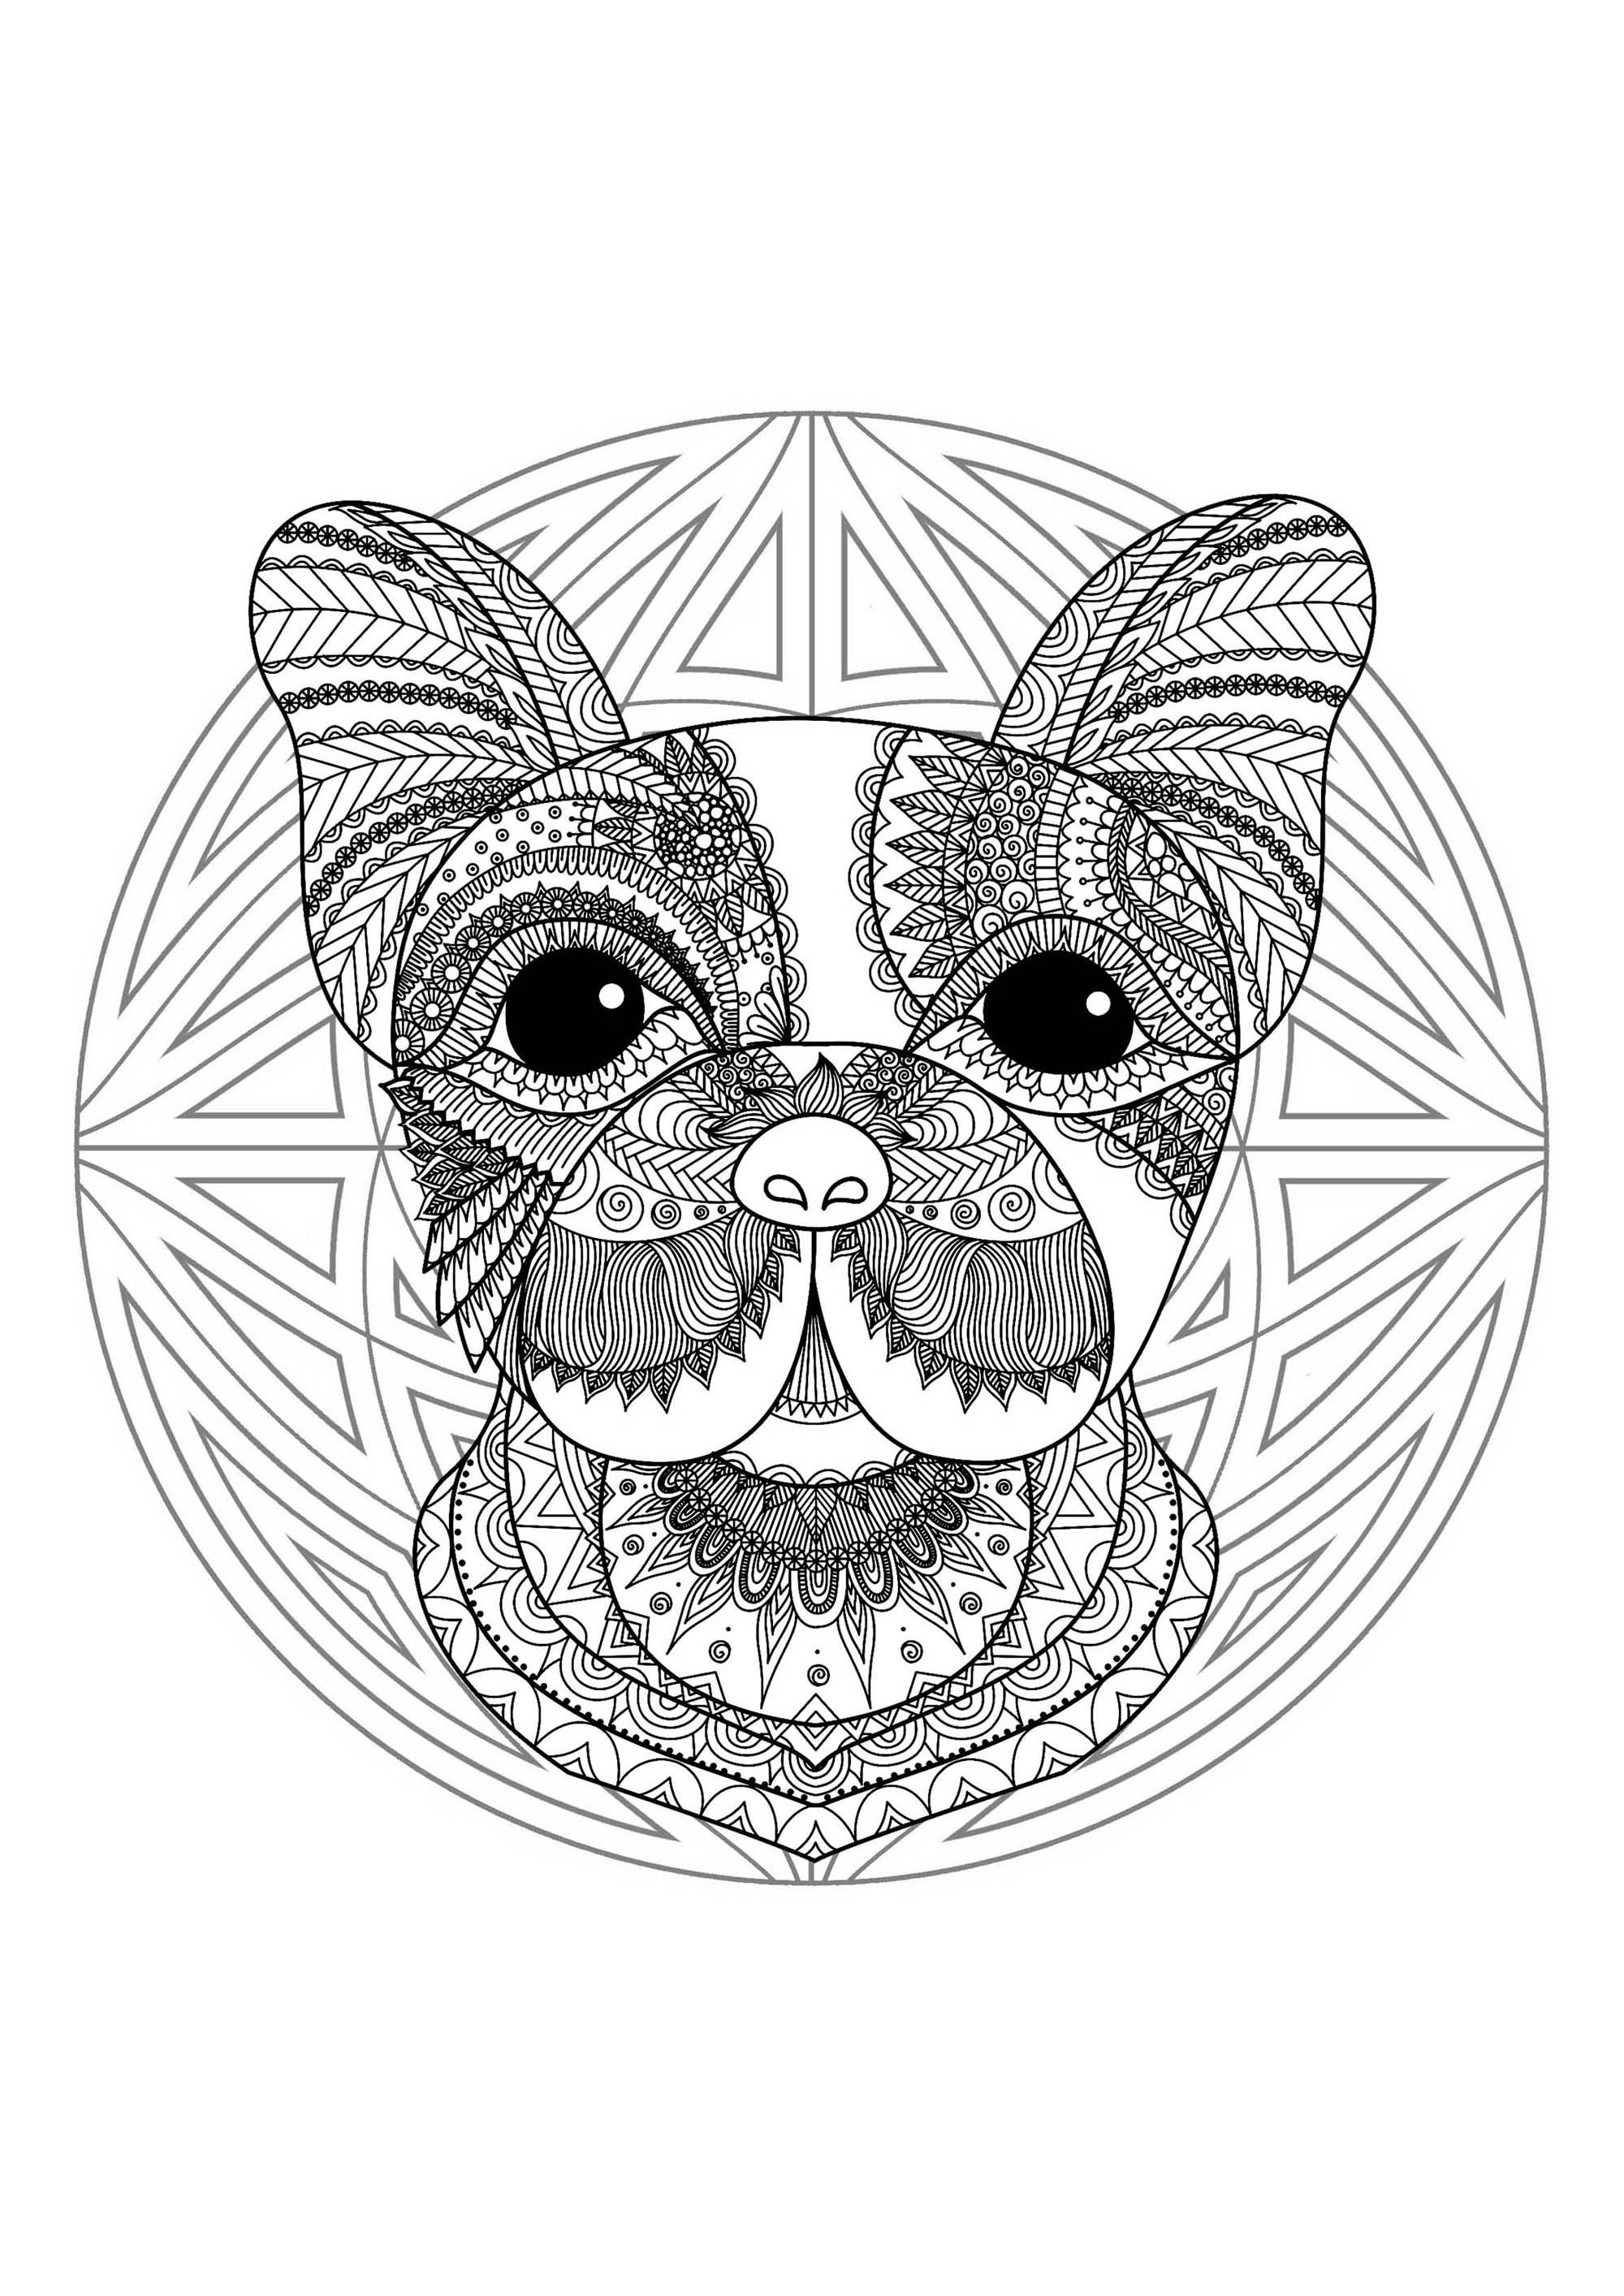 Mandala with cute Dog head and geometric patterns - Mandalas Adult ...